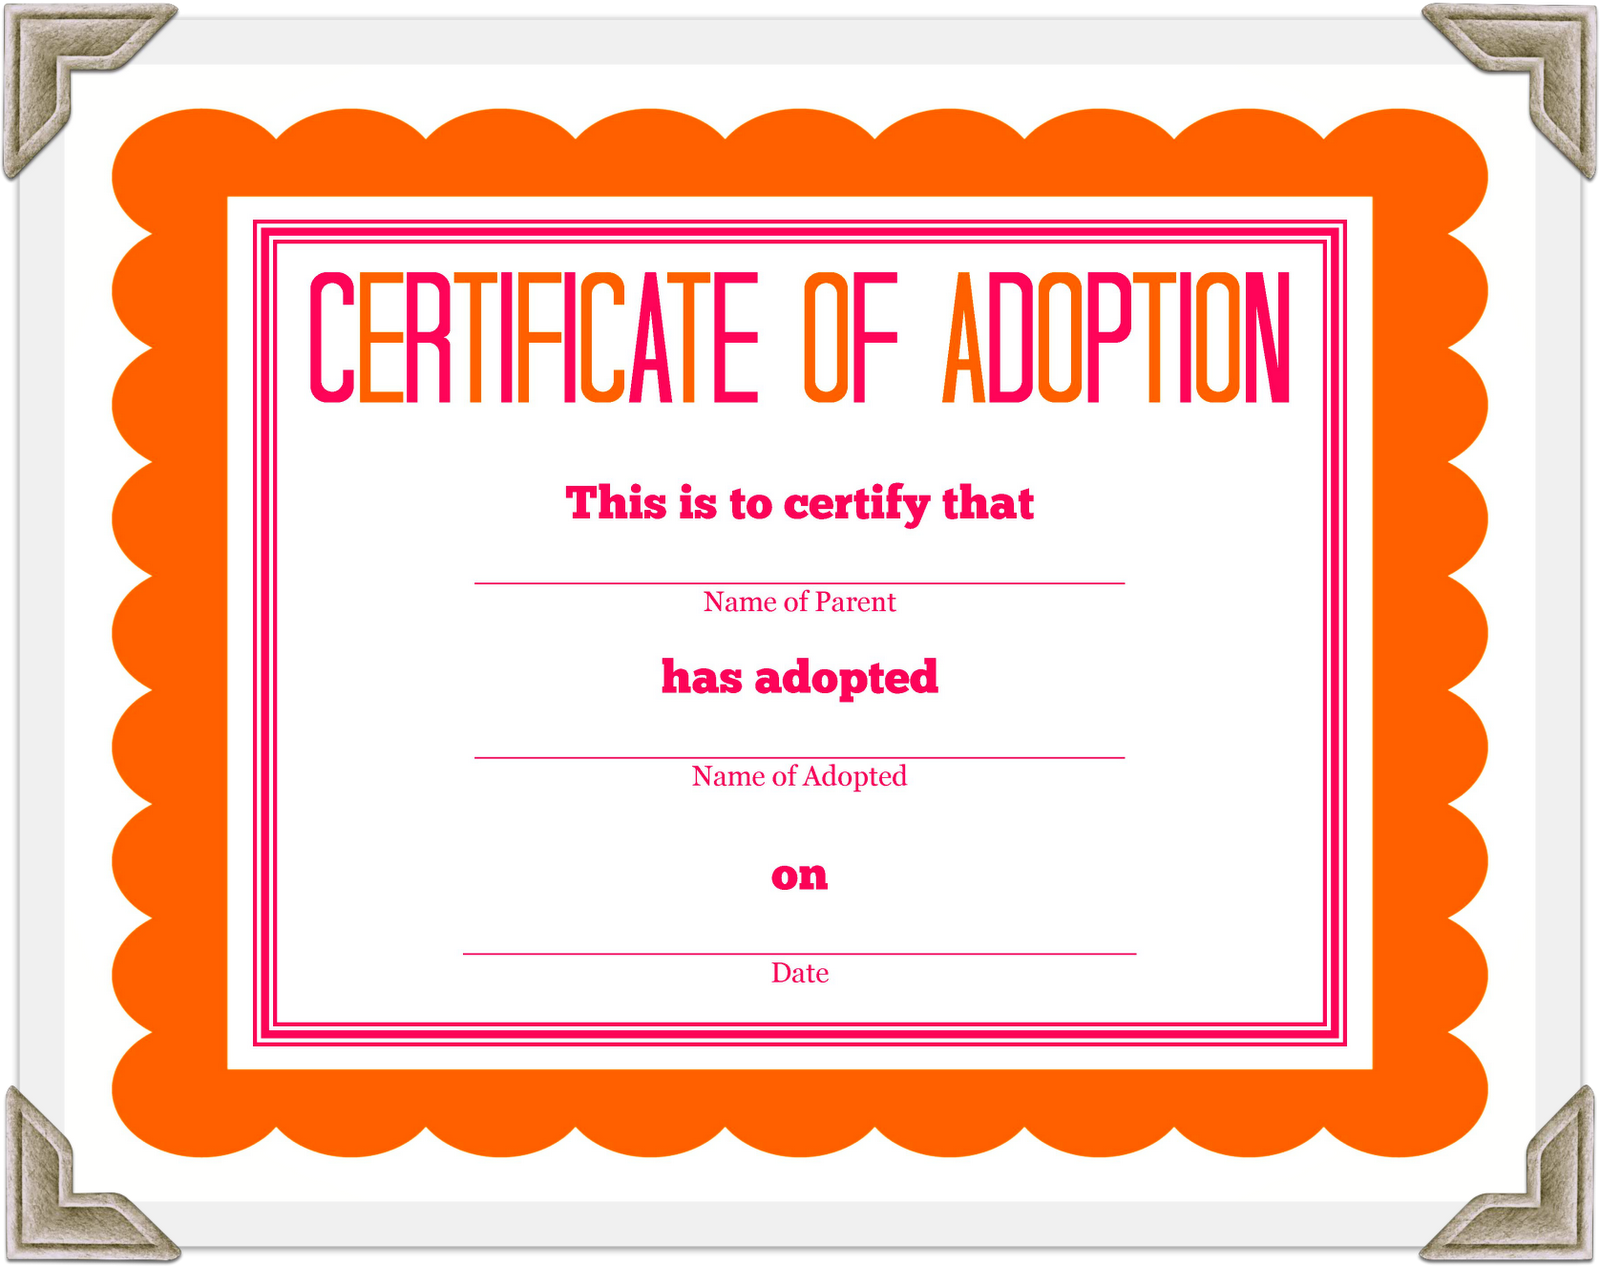 Stuffed Animal Adoption Certificate